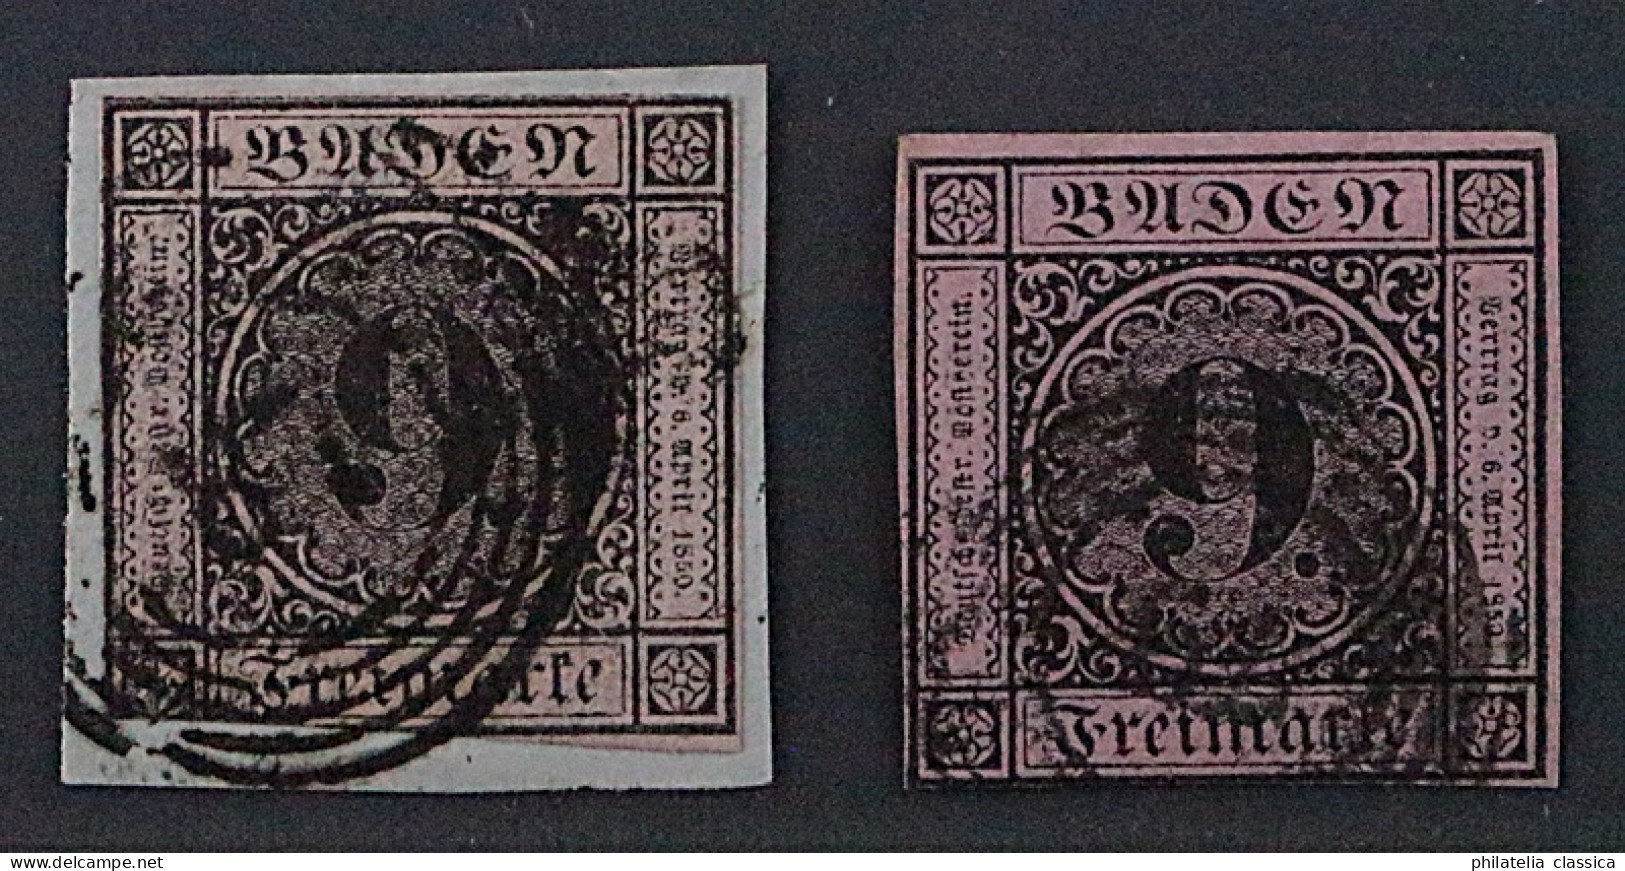 1851, BADEN 4 A + B, 9 Kr. Schwarz/altrosa + Lilarosa, Beide Farben Kpl. 235,-€ - Afgestempeld